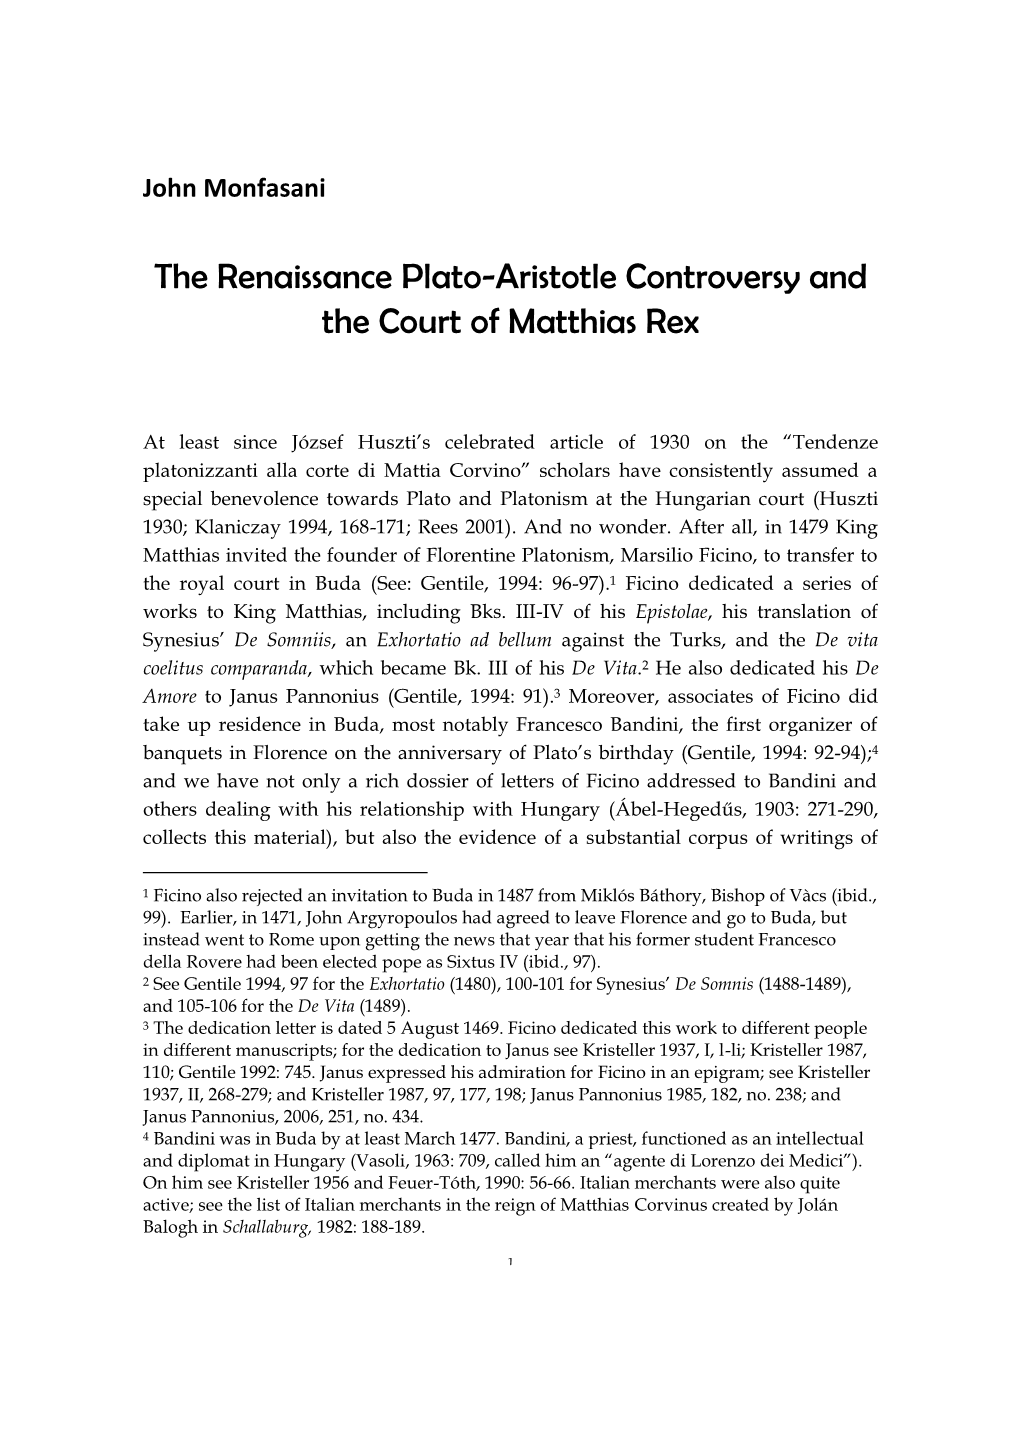 The Renaissance Plato-Aristotle Controversy and the Court of Matthias Rex